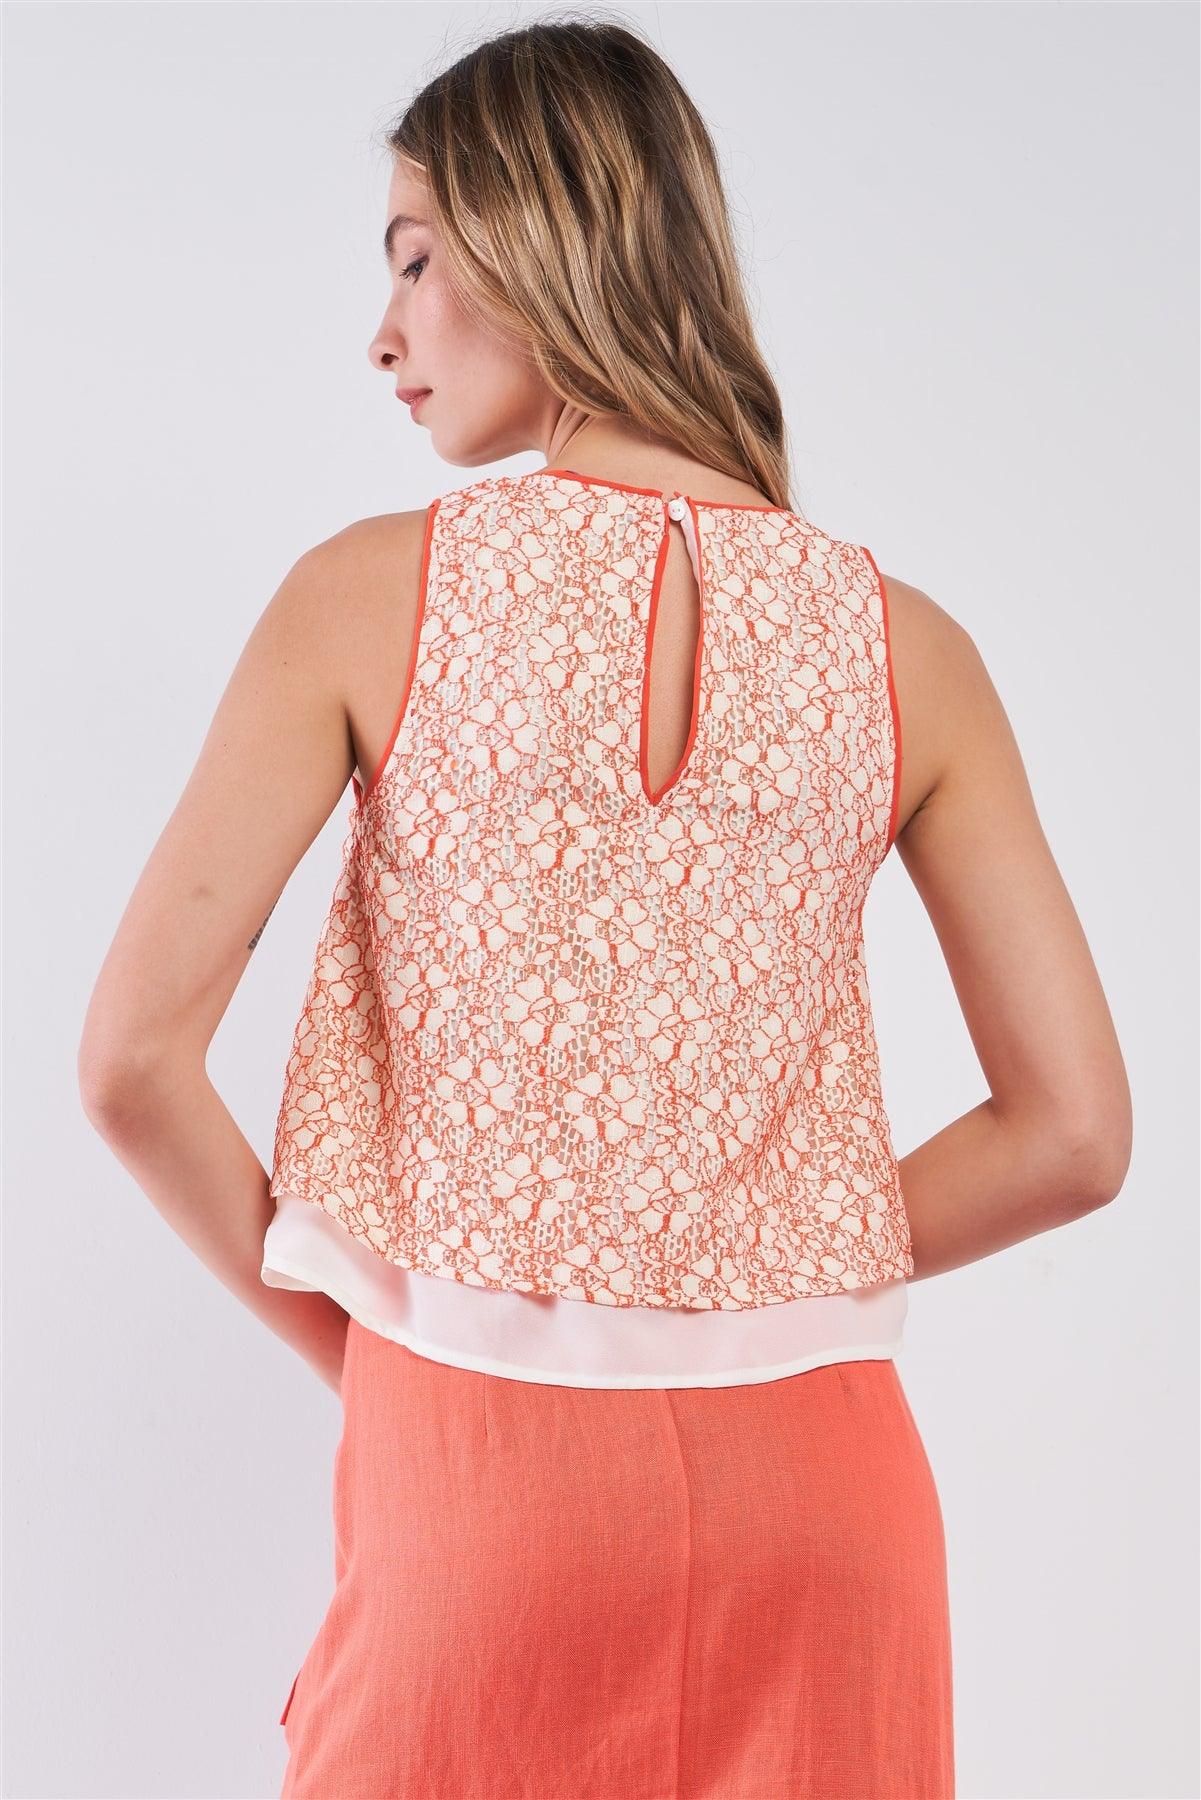 Sunny Apricot Orange Sleeveless Floral Crochet Layered Round Neck Flare Top /1-2-2-1